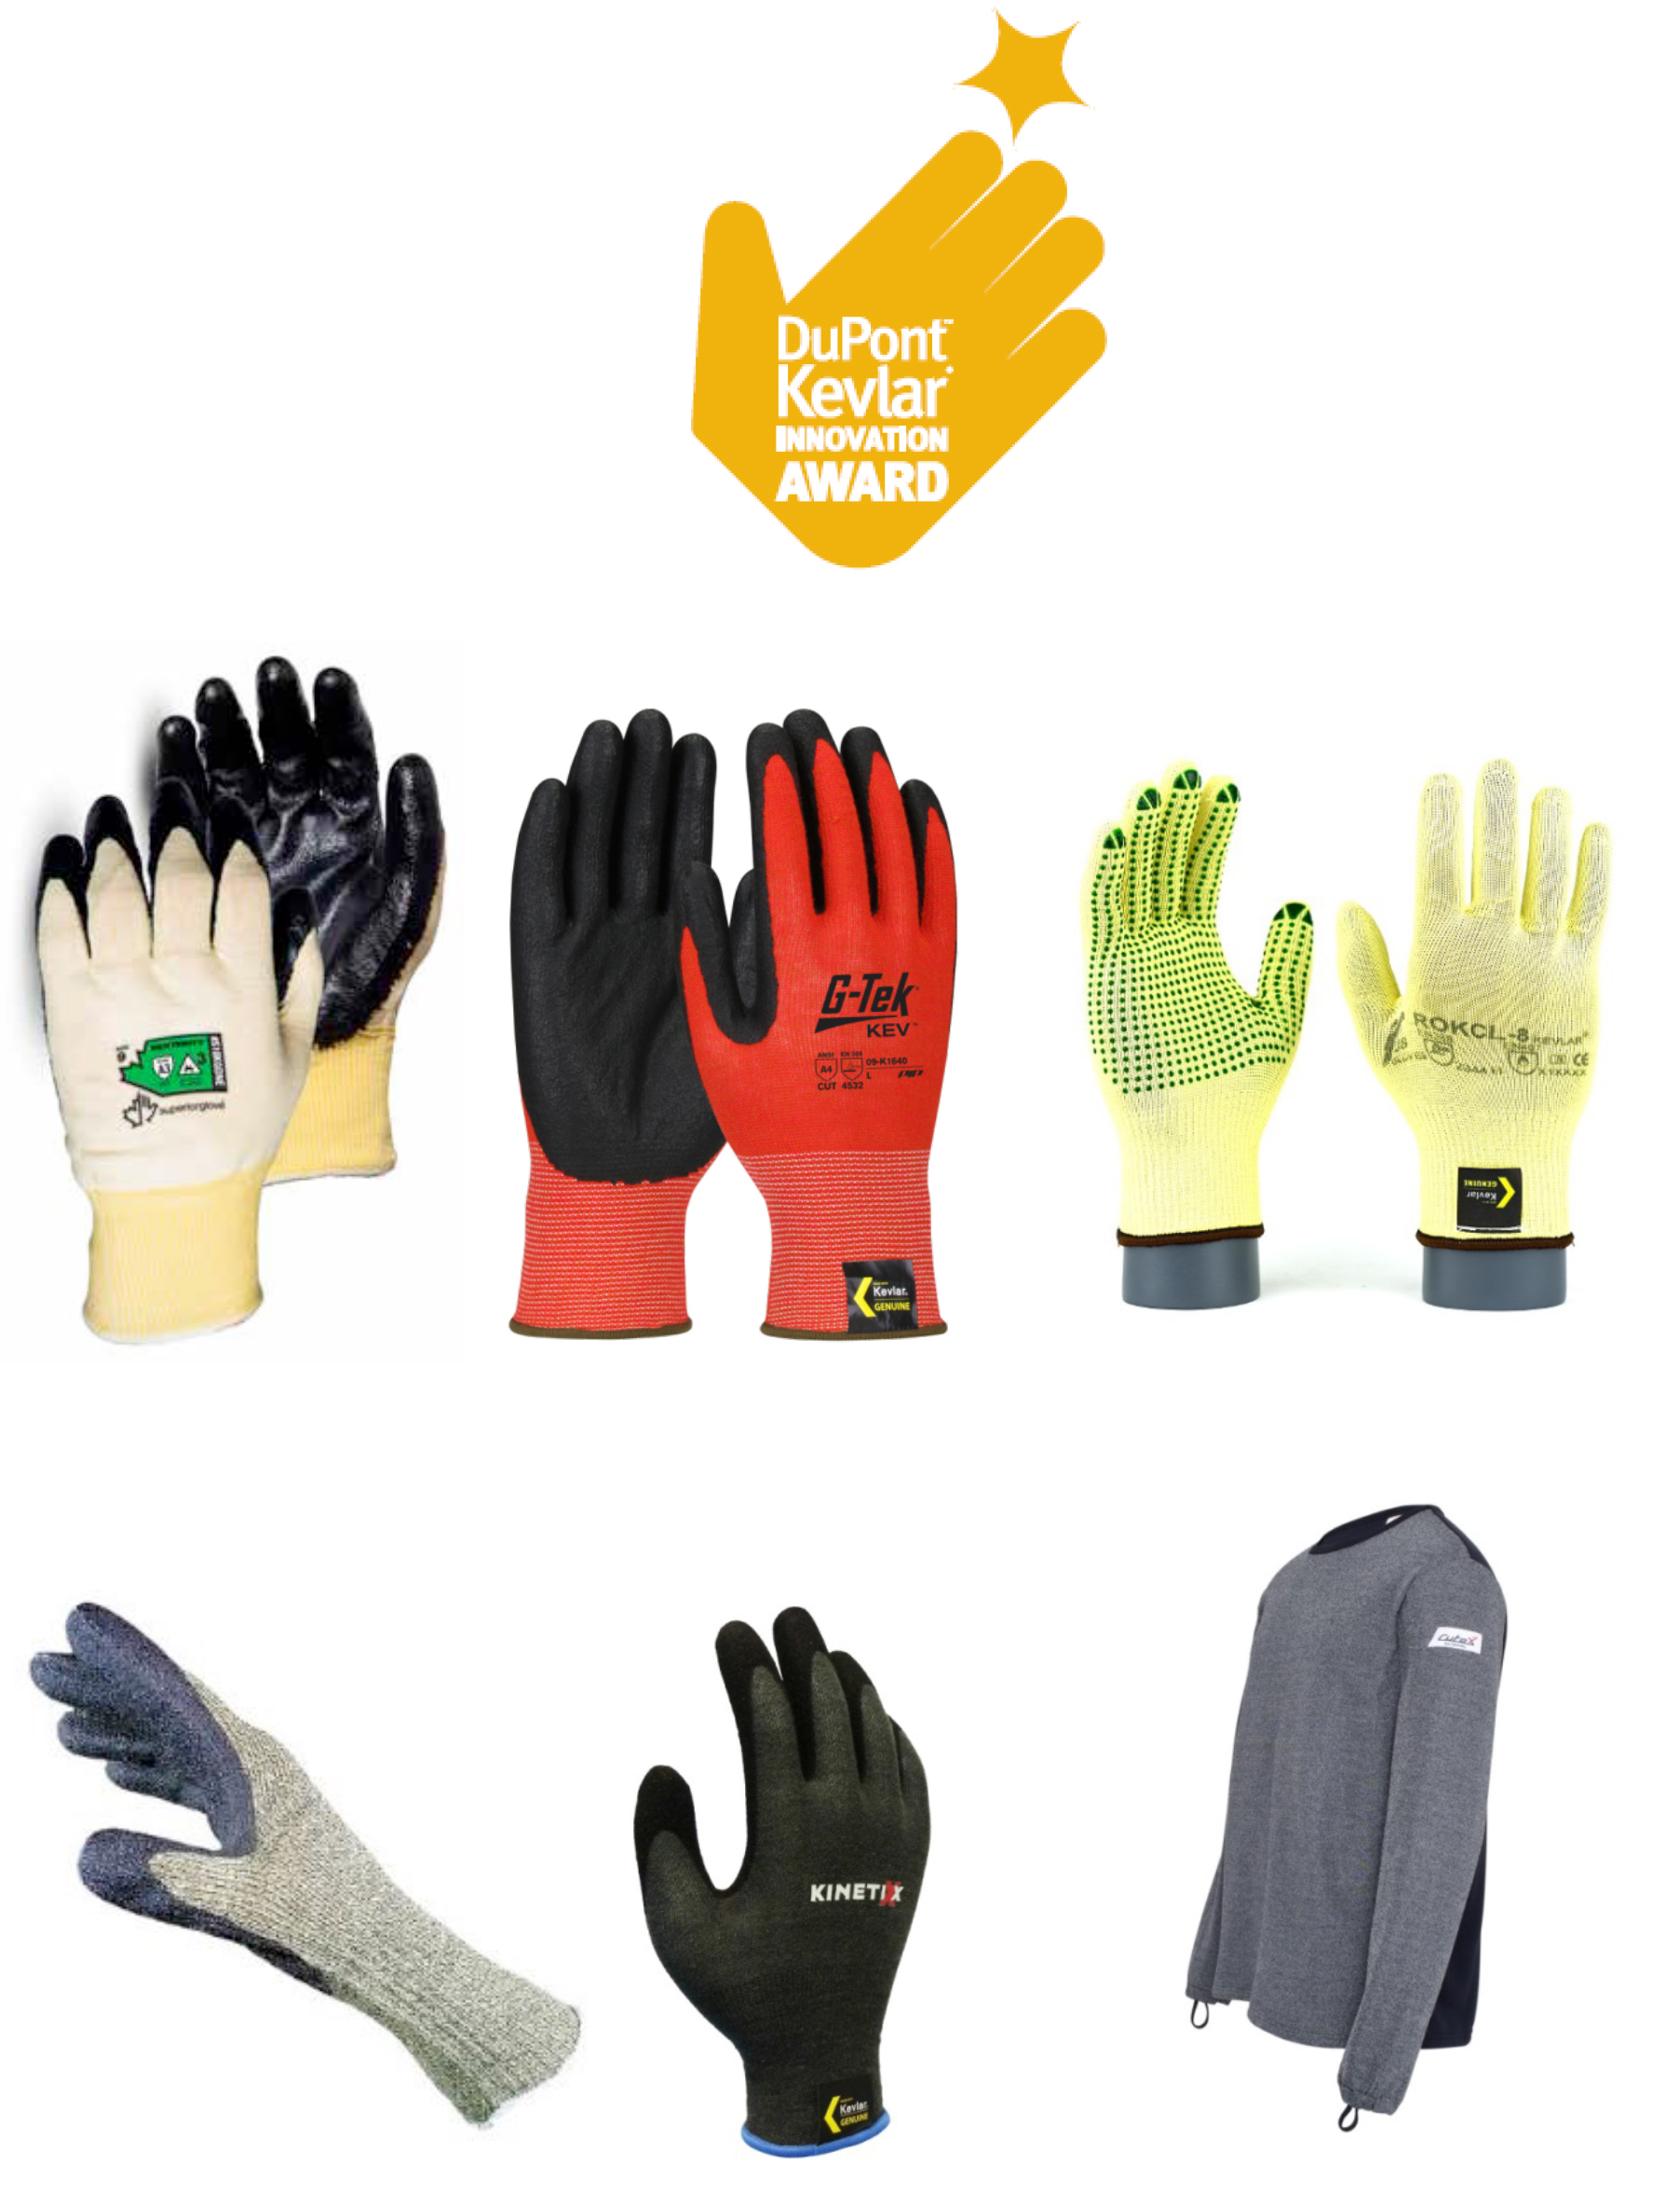 DuPont Awards European Glove Innovations, dupont kevlar 